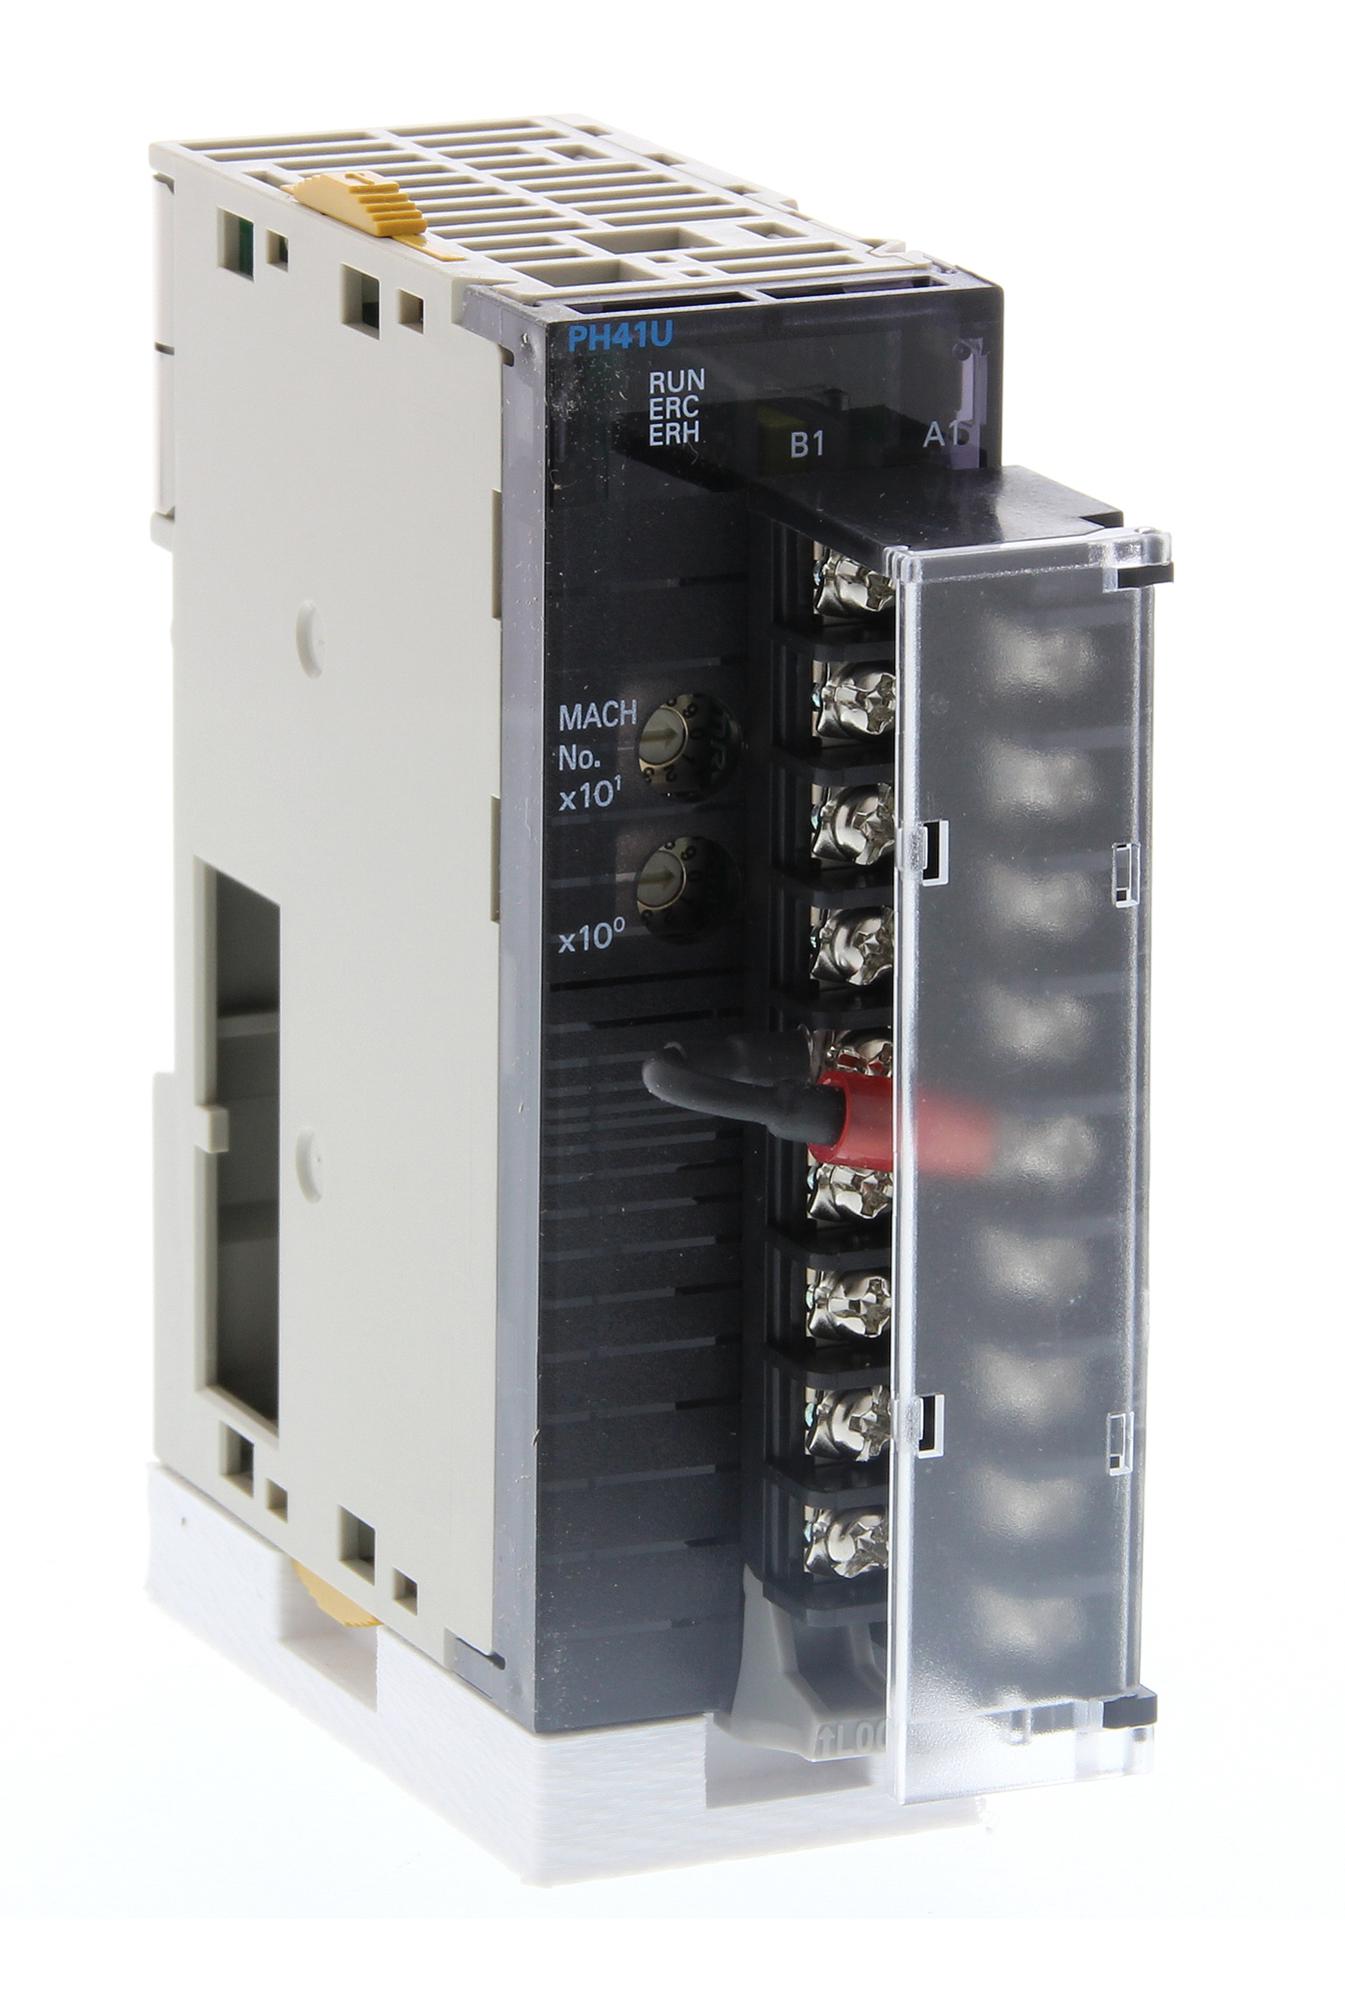 CJ1W-PH41U ANALOGUE INPUT PLC CONTROLLERS OMRON